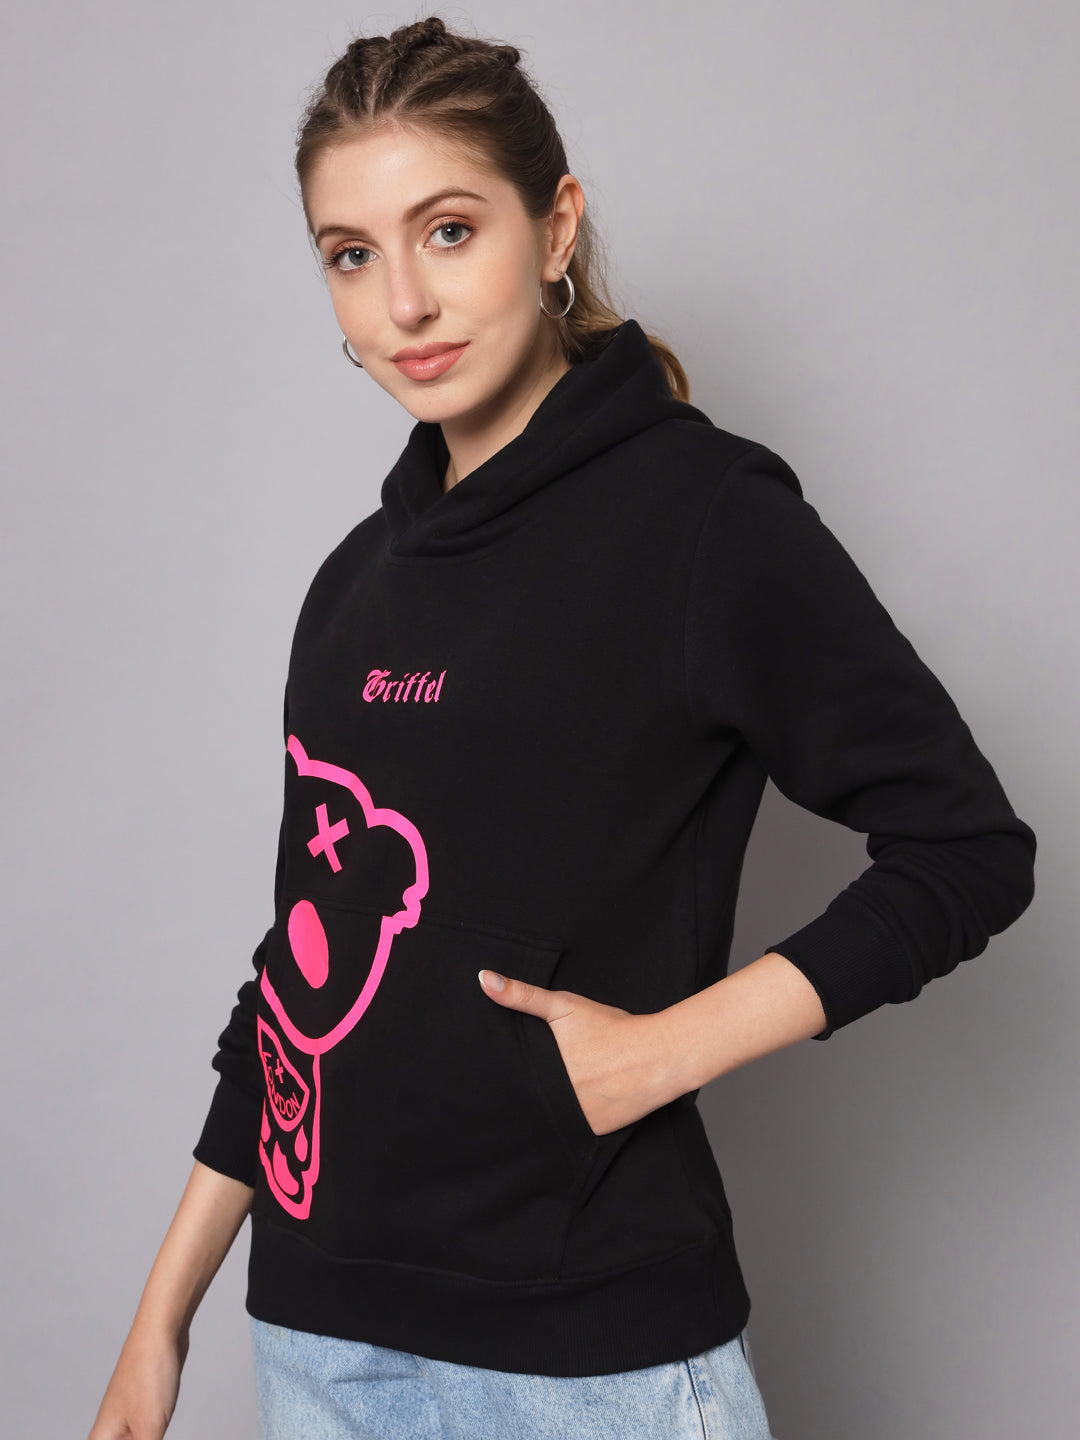 Griffel Women’s Cotton Fleece Full Sleeve Black Teddy Hoodie Sweatshirt - griffel